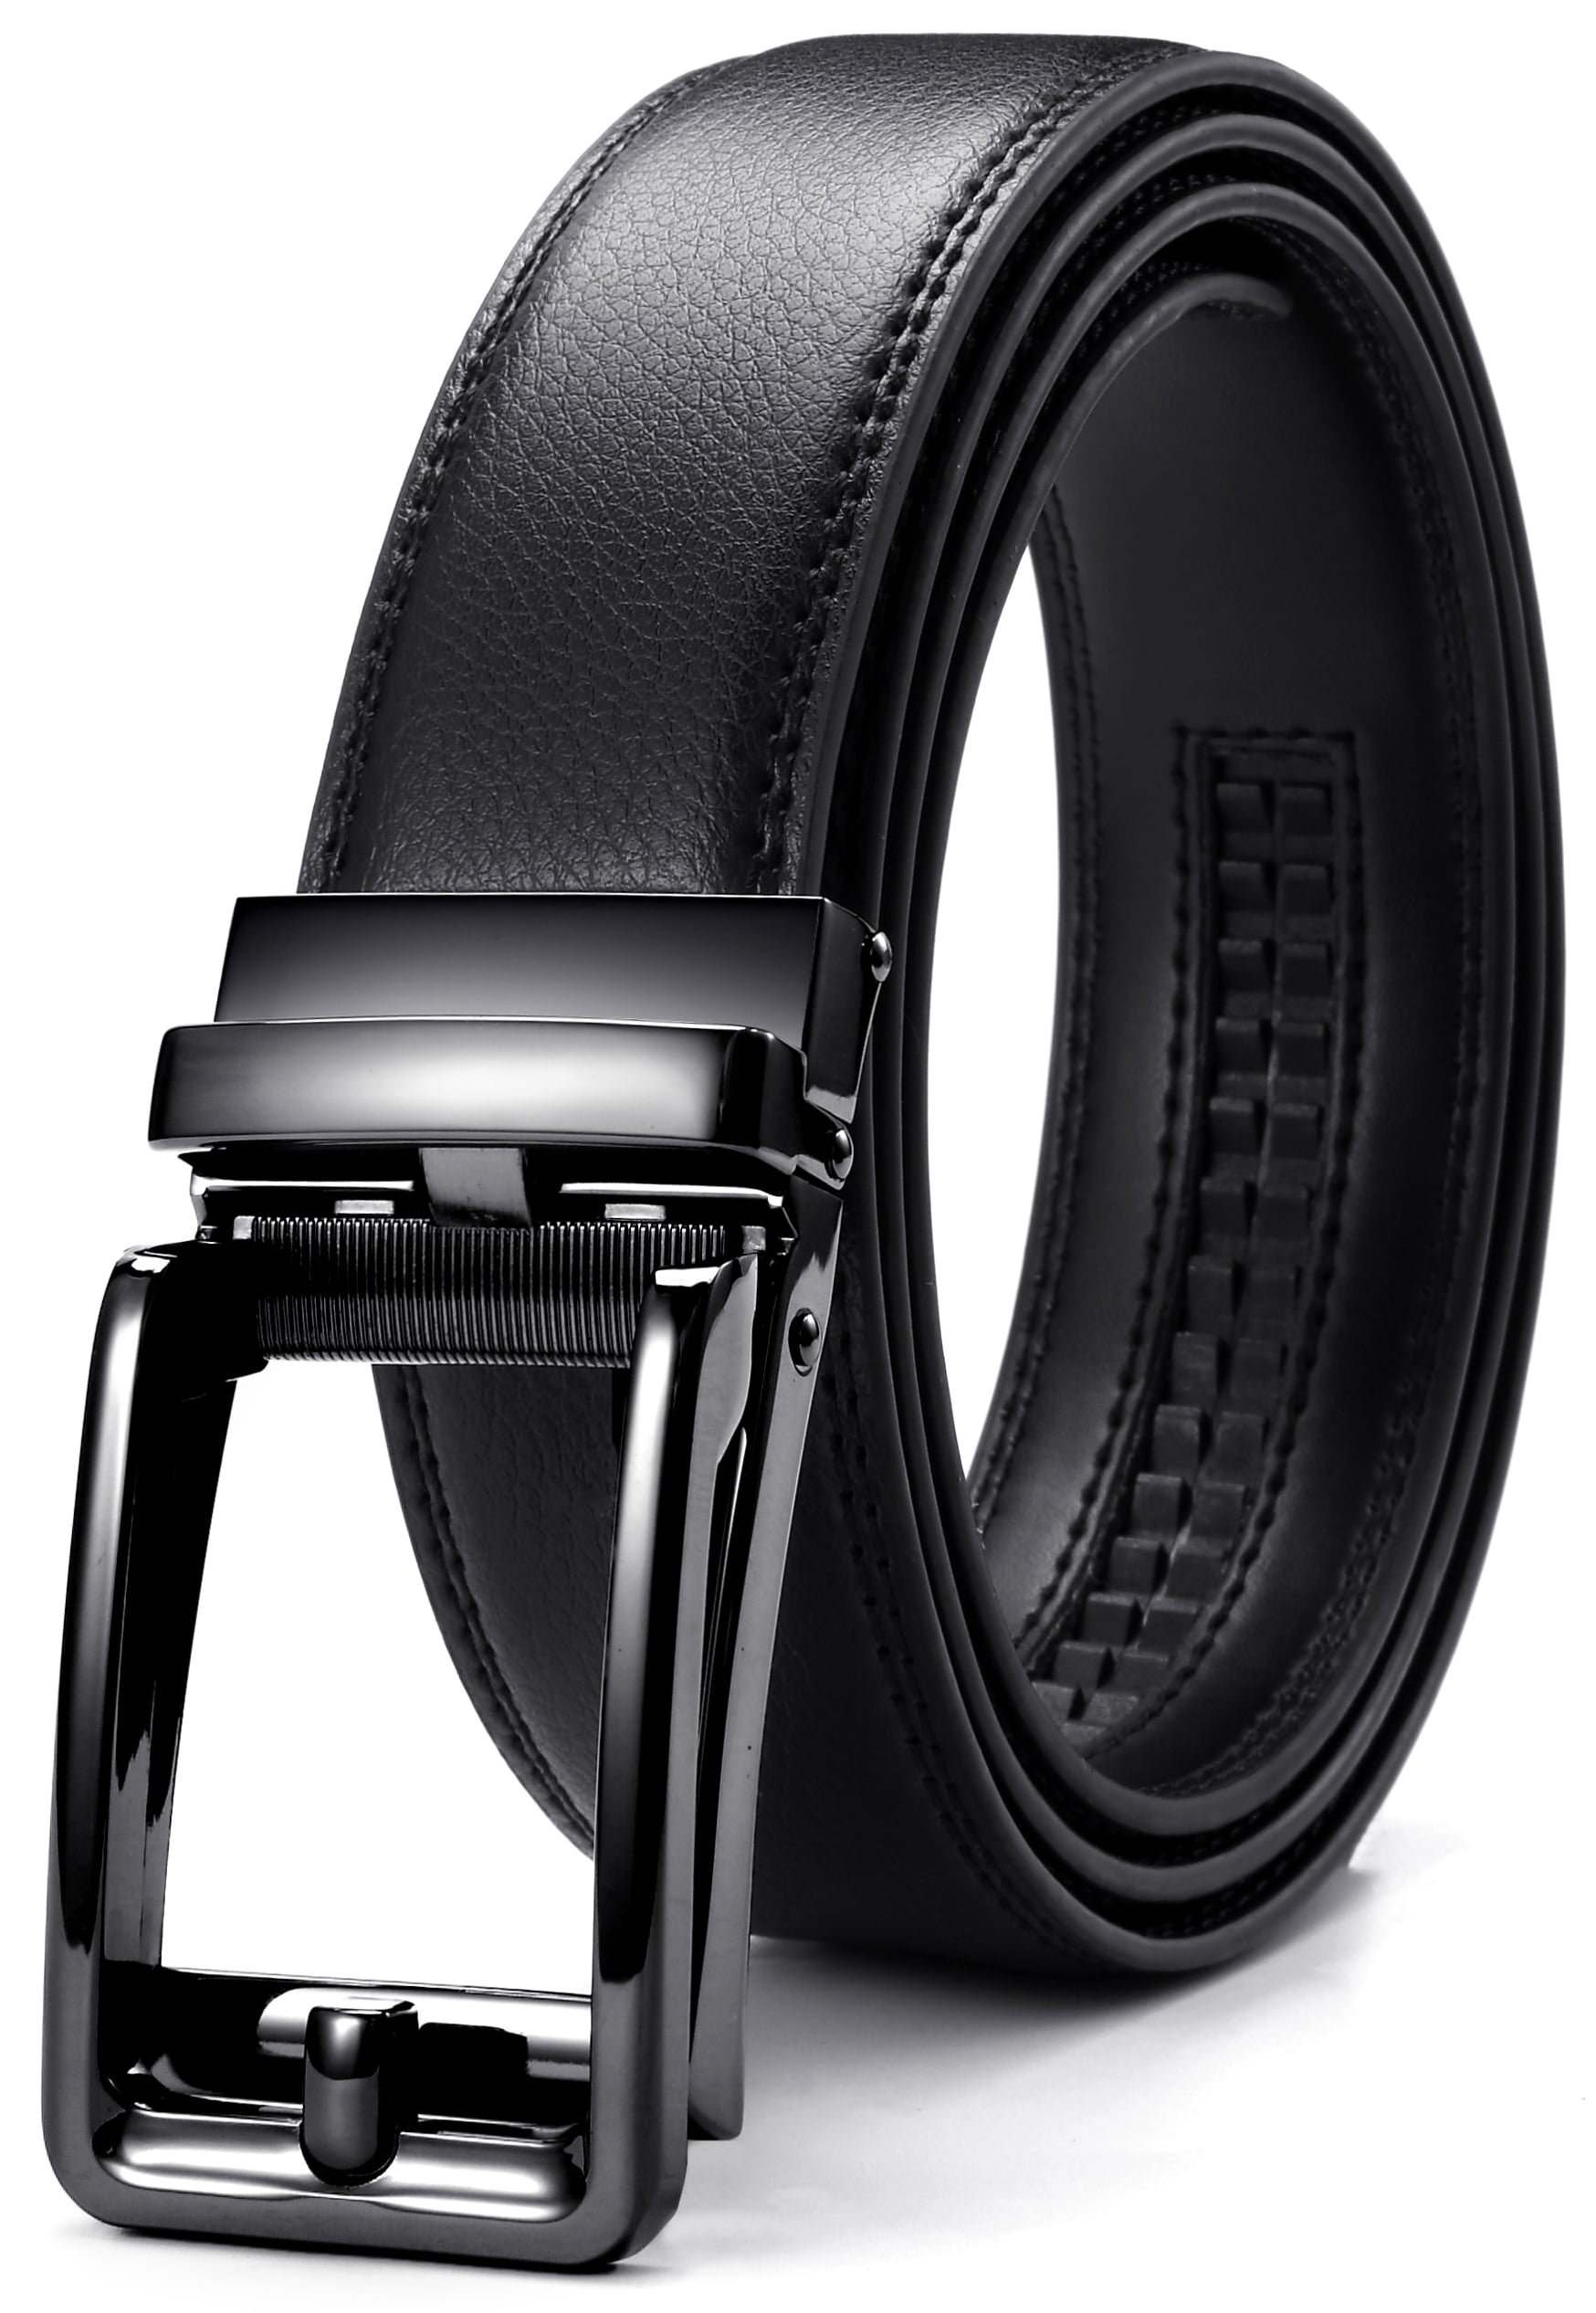 Chaoren Click Adjustable Belt Comfort with Slide Buckle Trim to Exact Fit Leather Ratchet Dress Belt 2 Pack 1 3/8